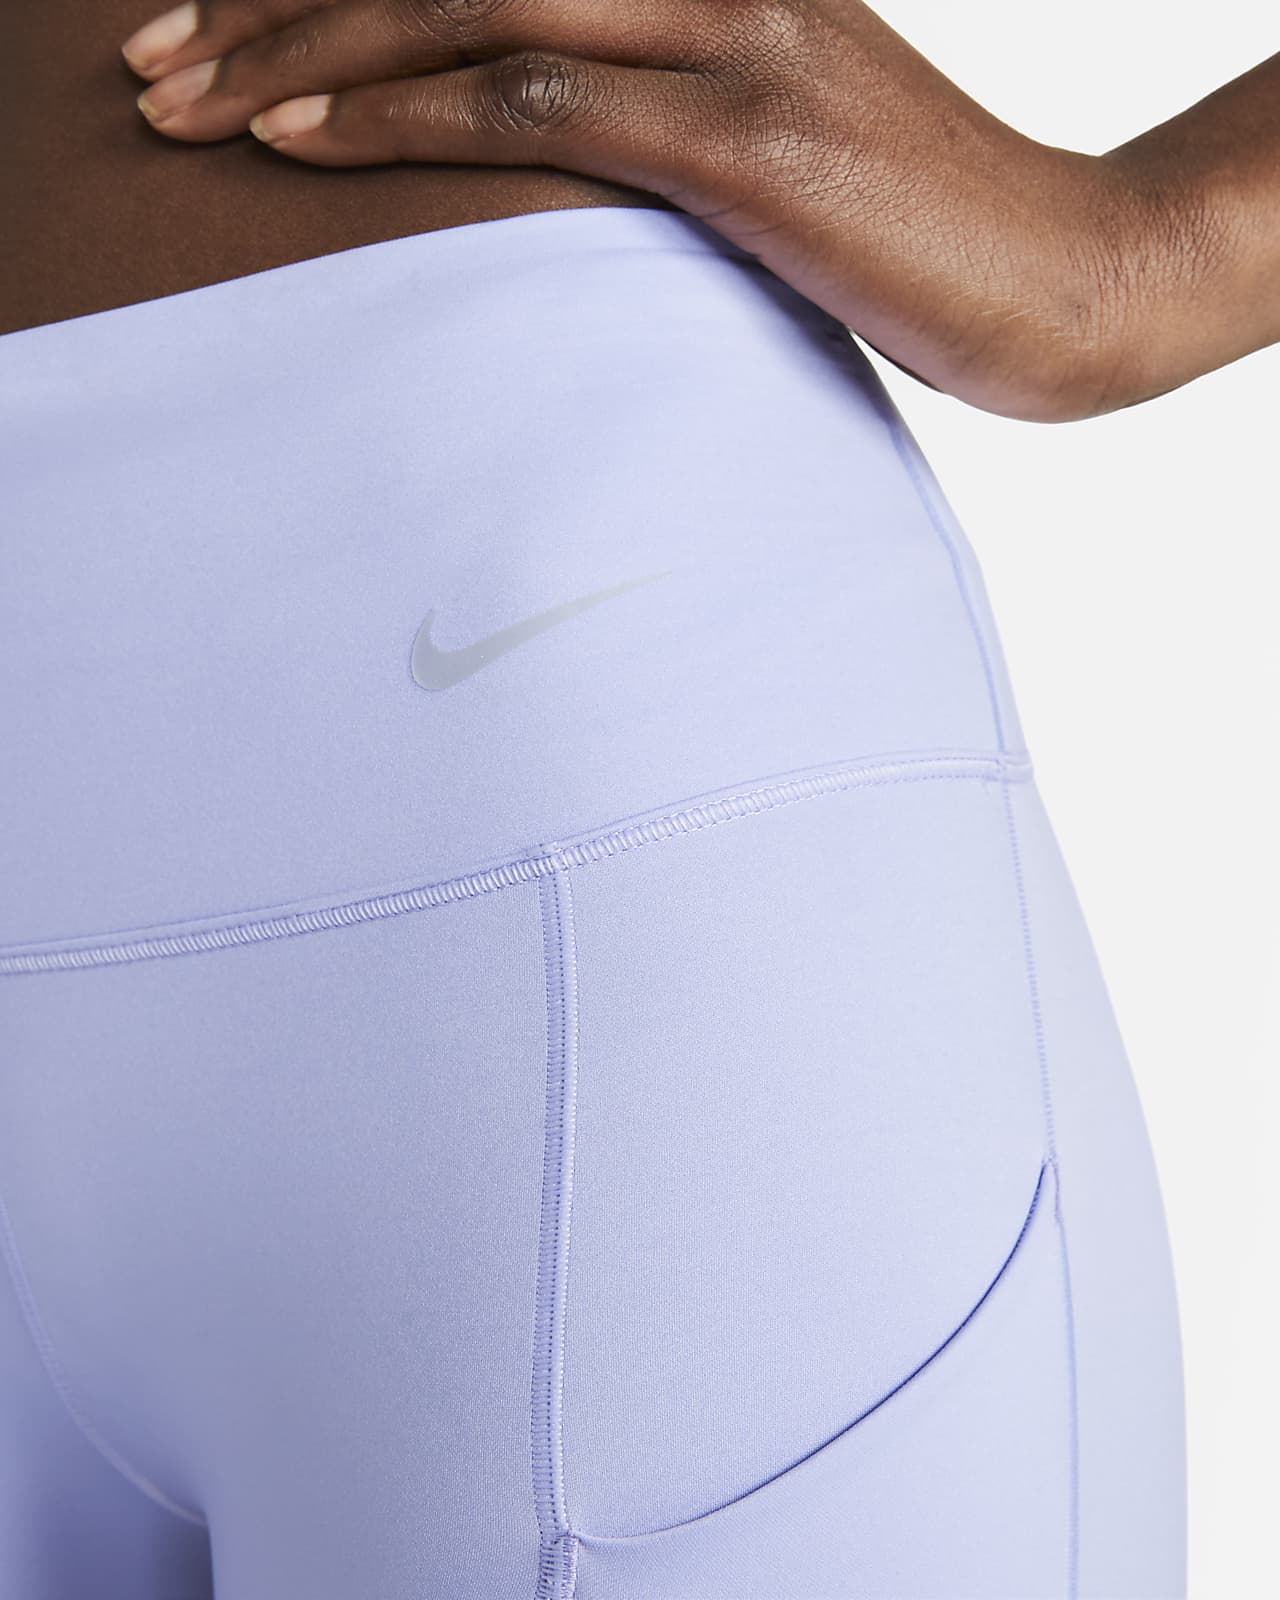 Legging avec poches Nike Dri-FIT One pour ado (fille)